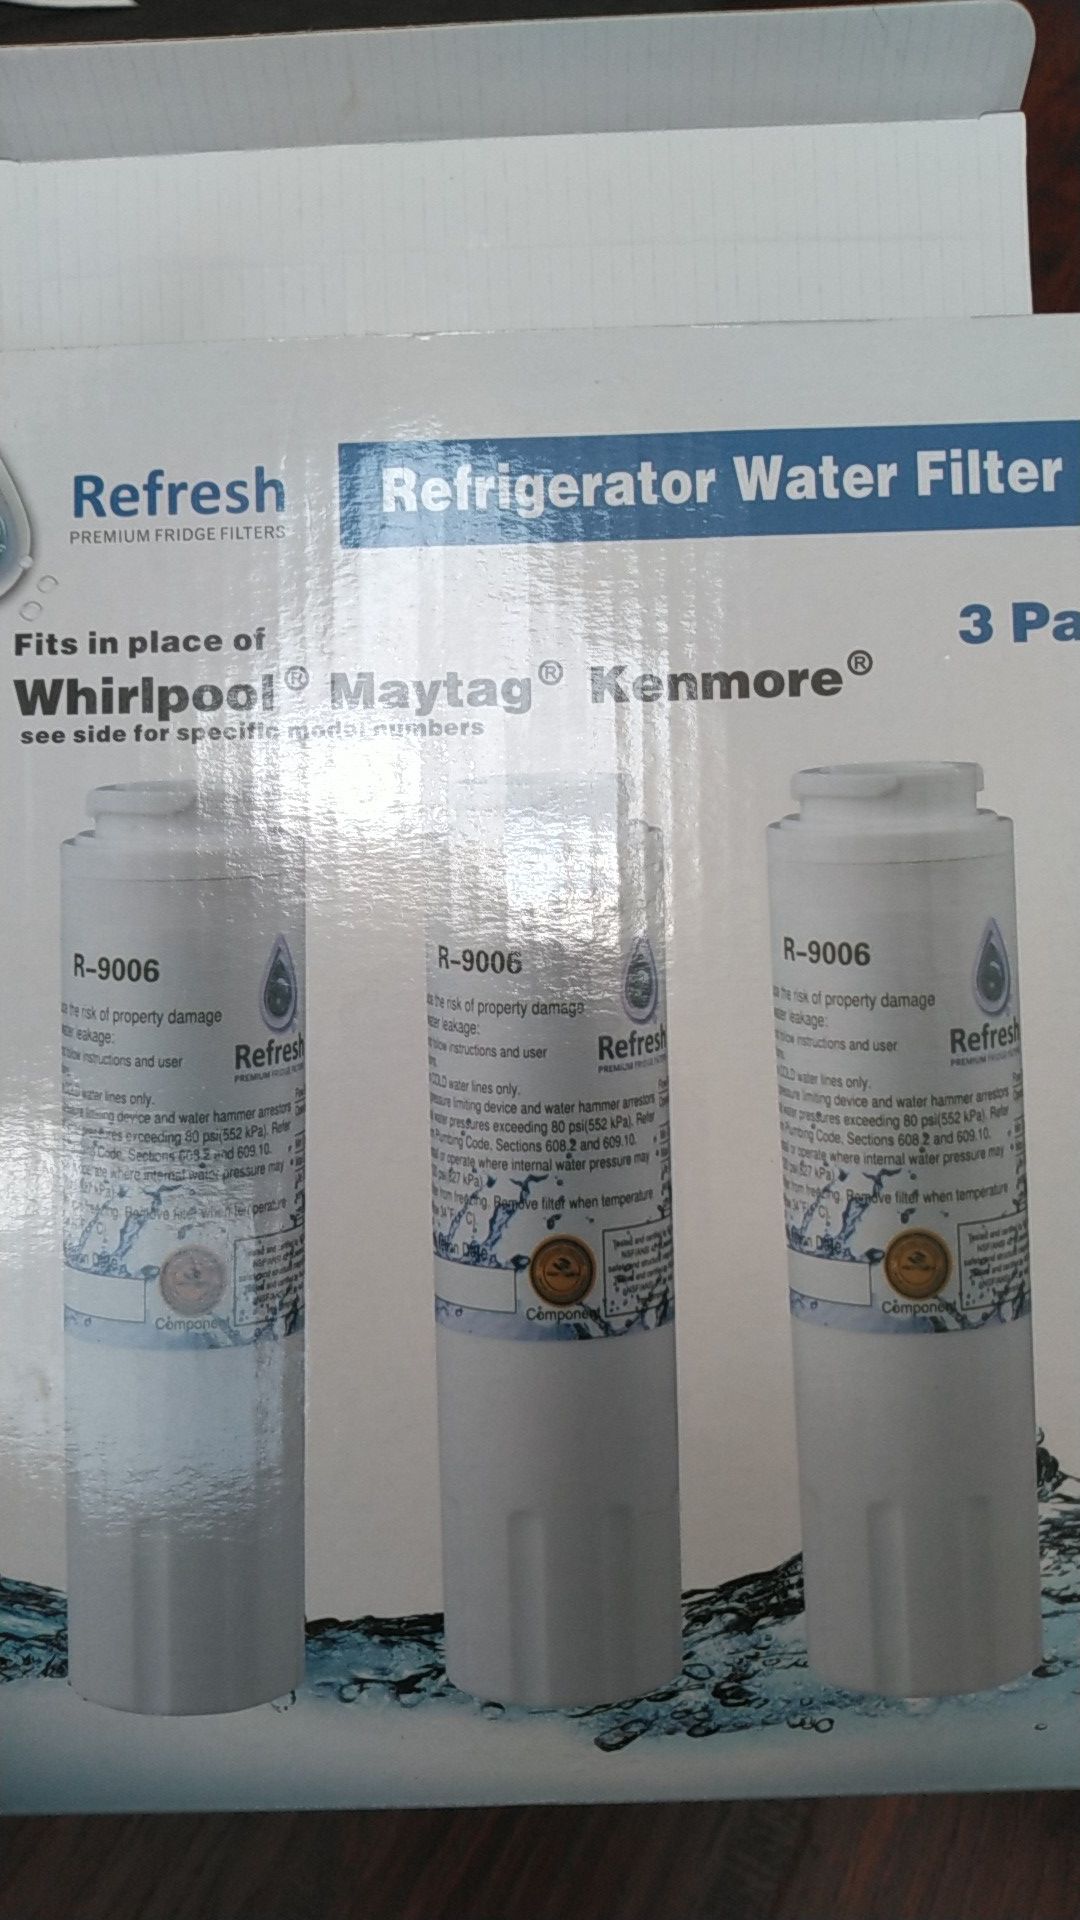 Fridge filter R-9006 Whirlpool Maytag Kenmore